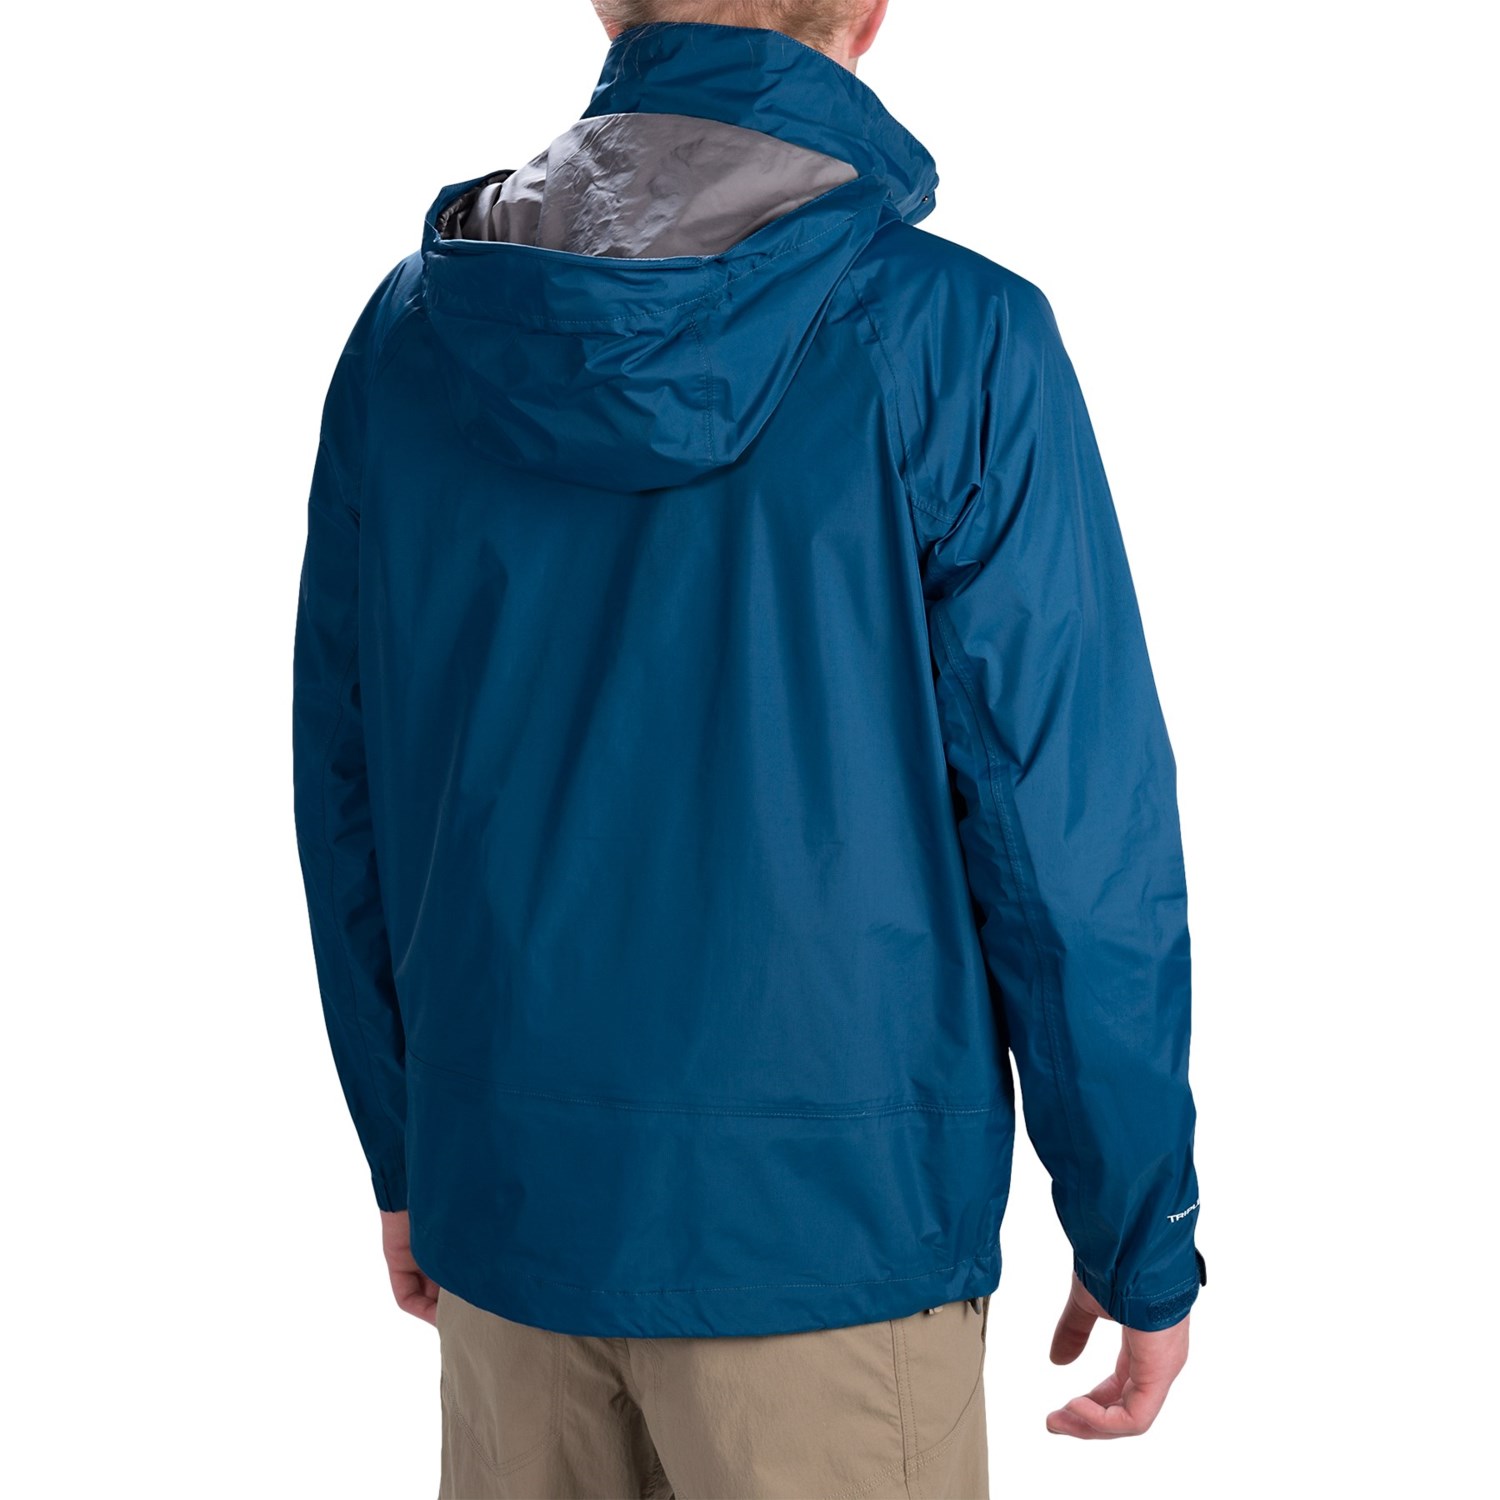 Lowe Alpine Lone Pine Jacket (For Men) - Save 66%